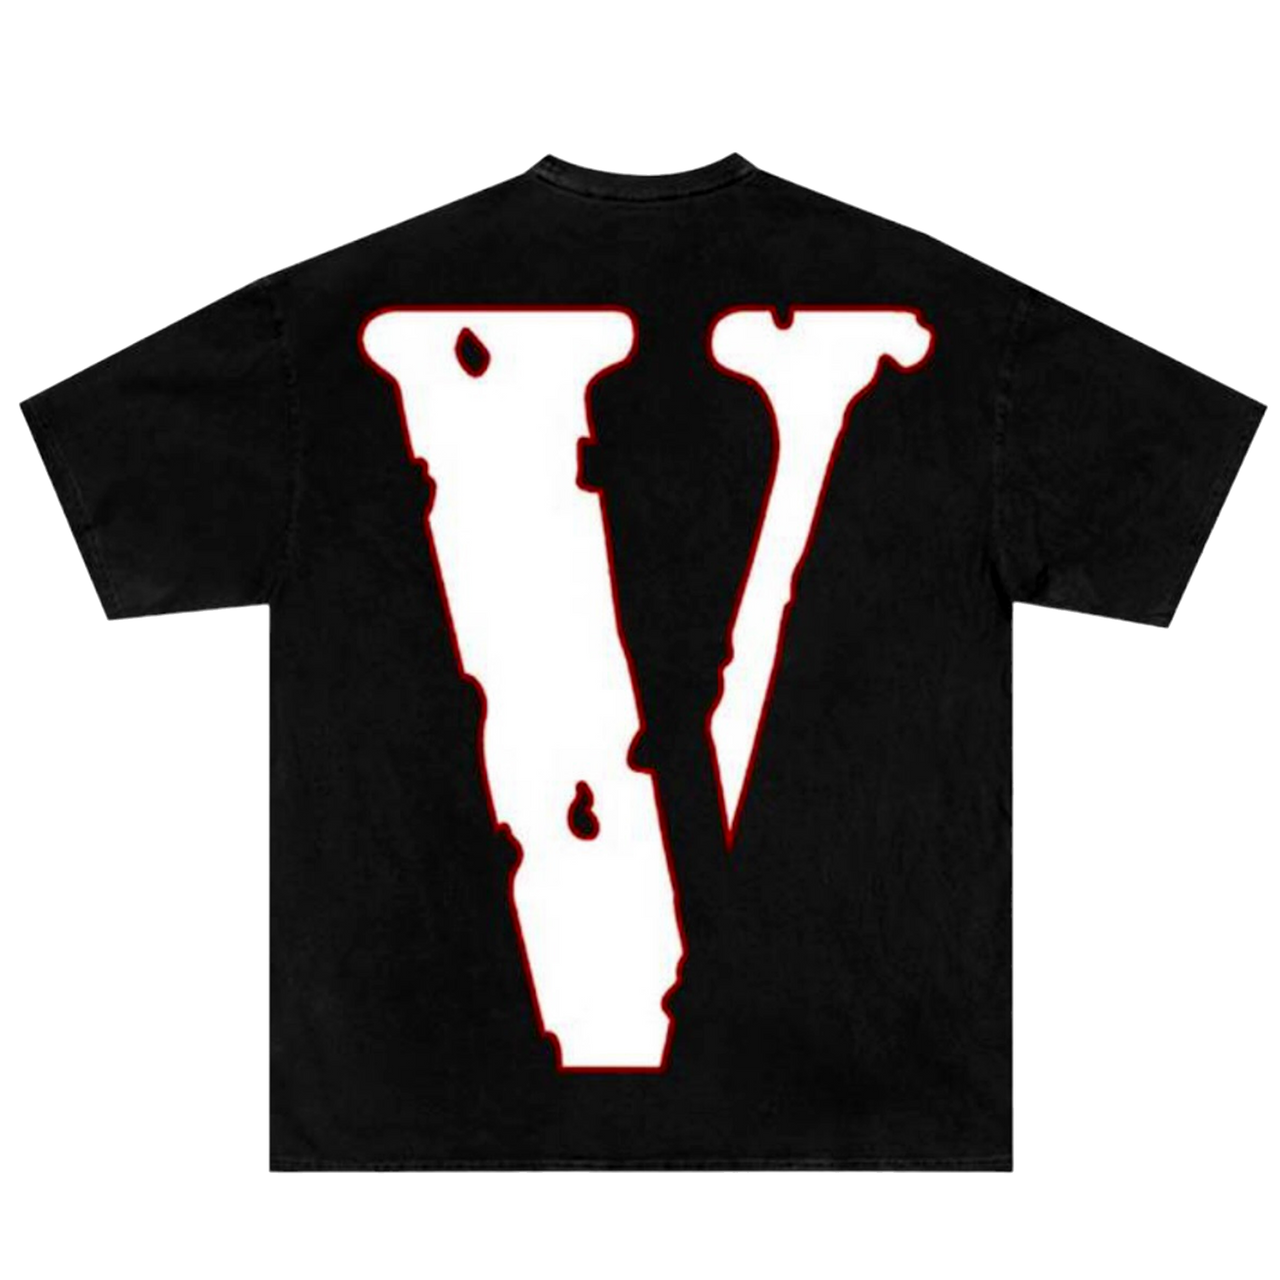 Vlone x Youngboy NBA Murder Business Tee Black